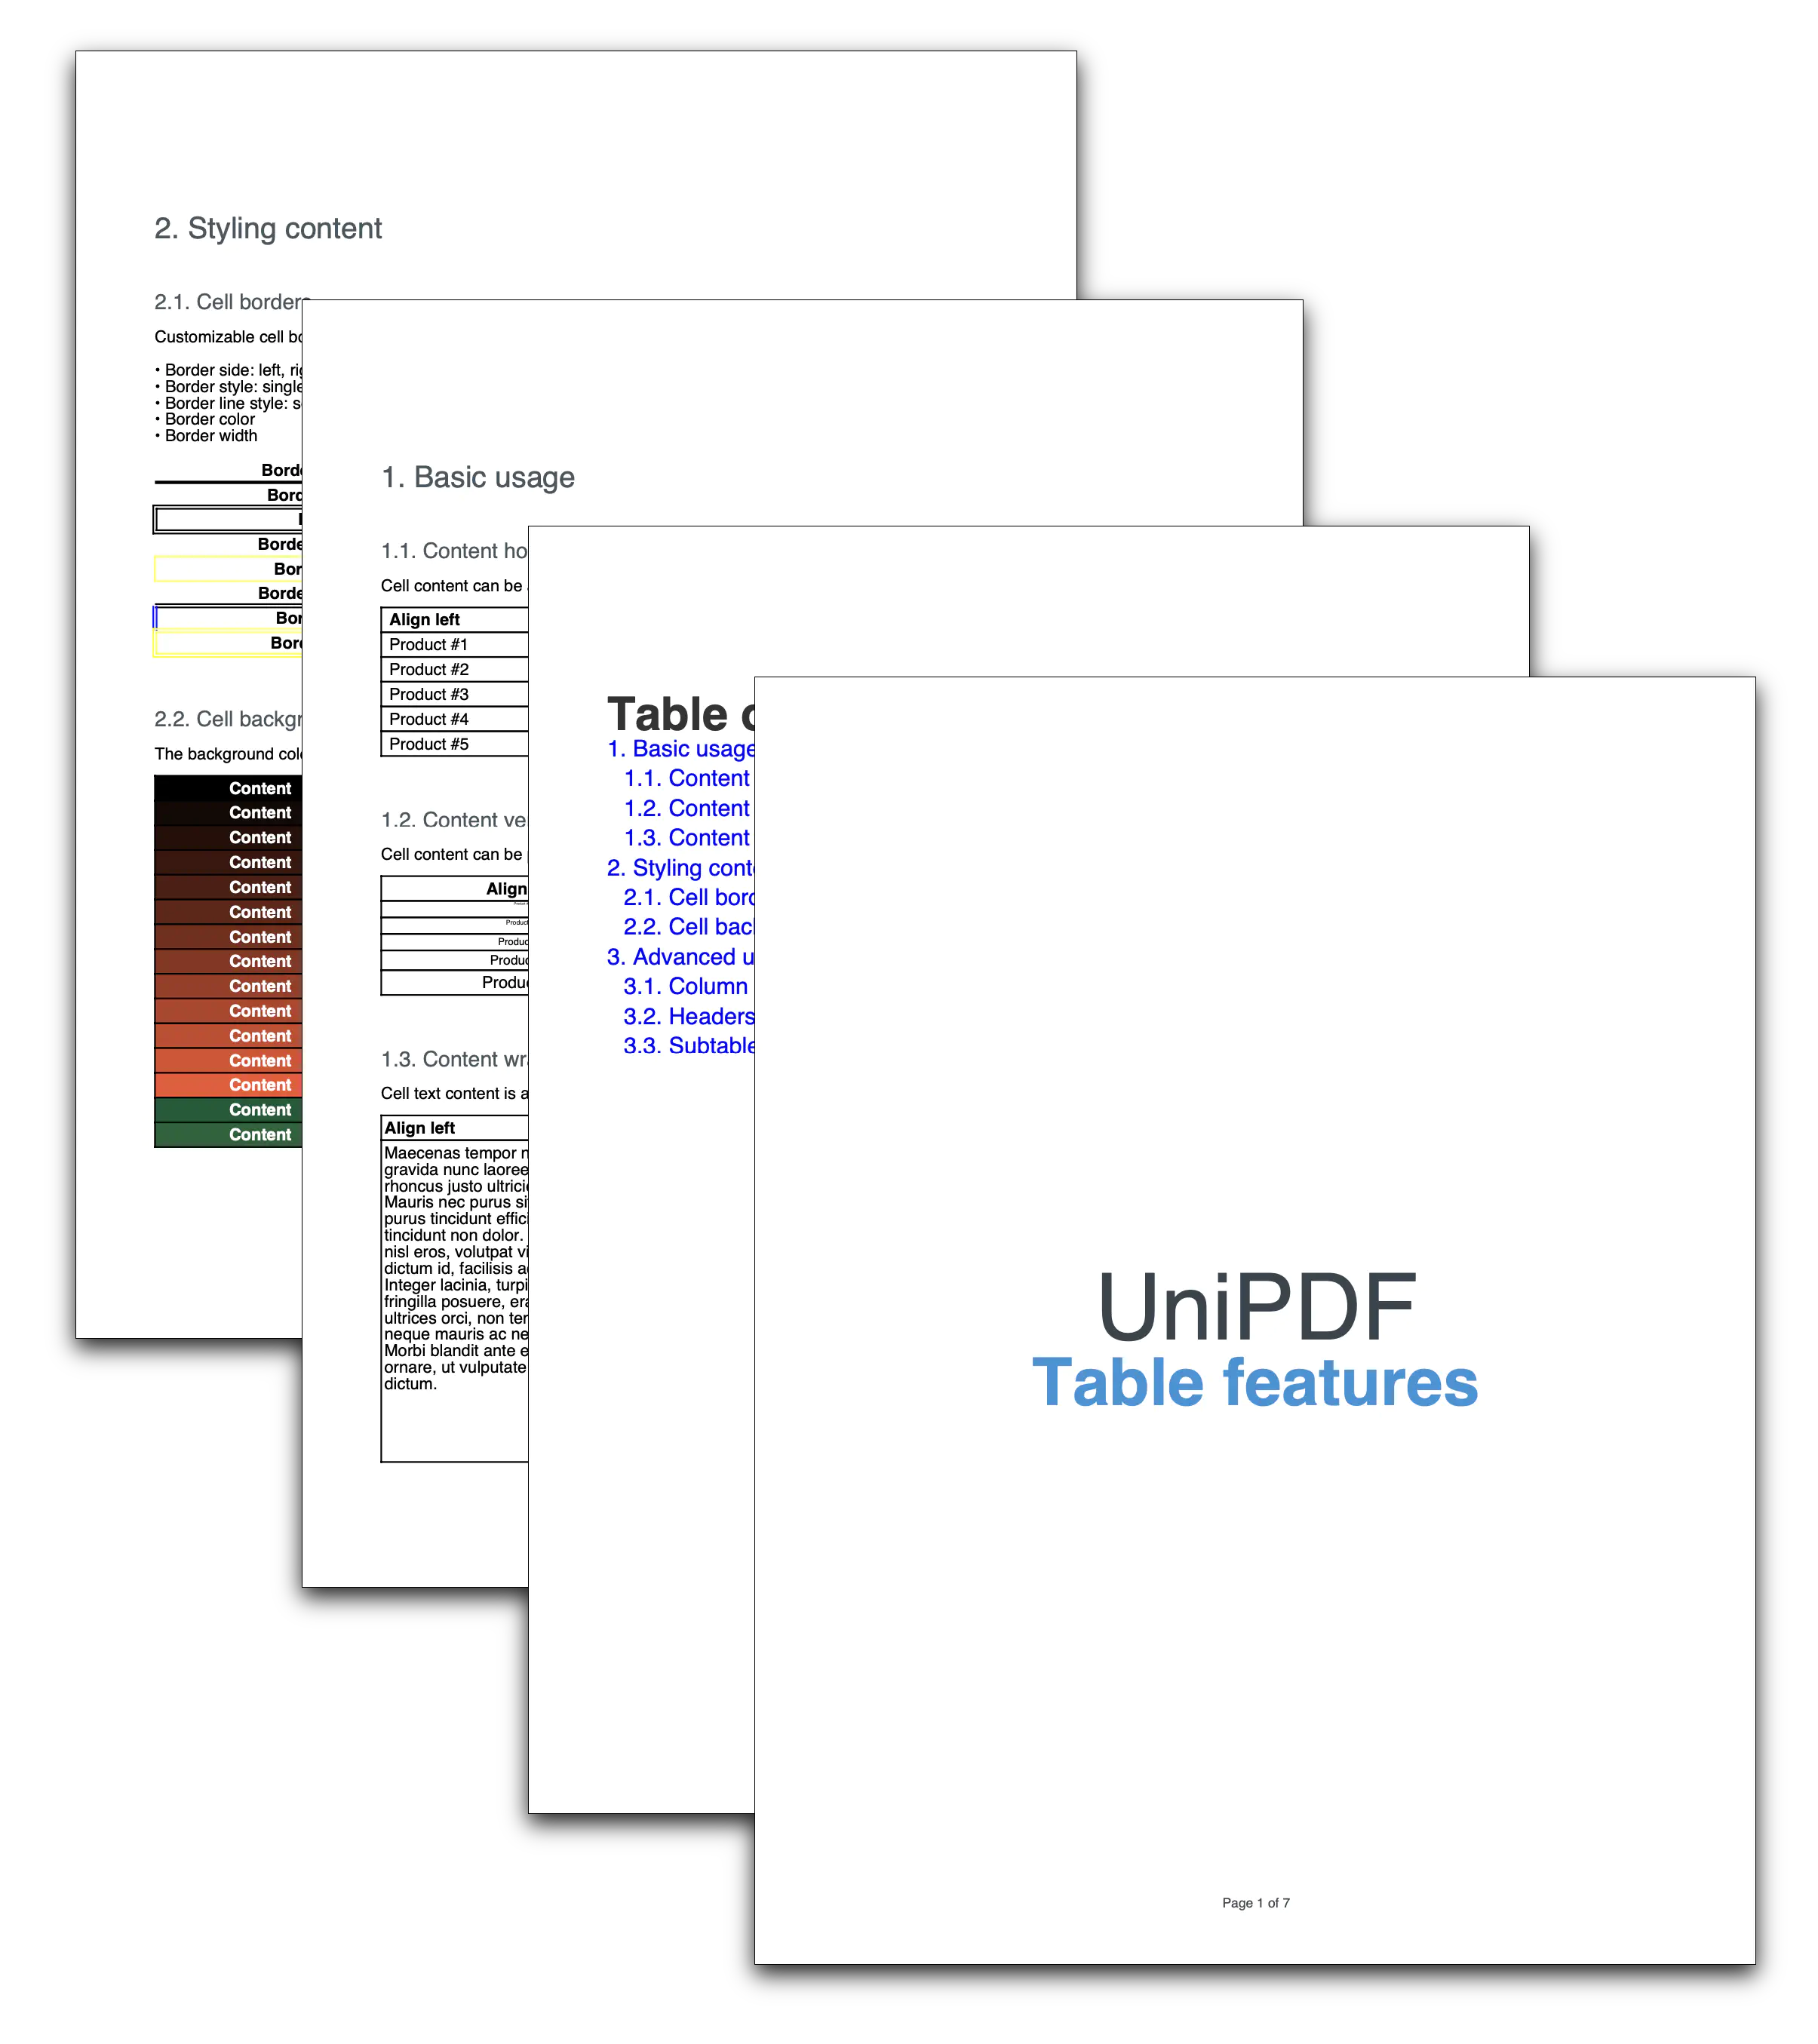 PDF Tables